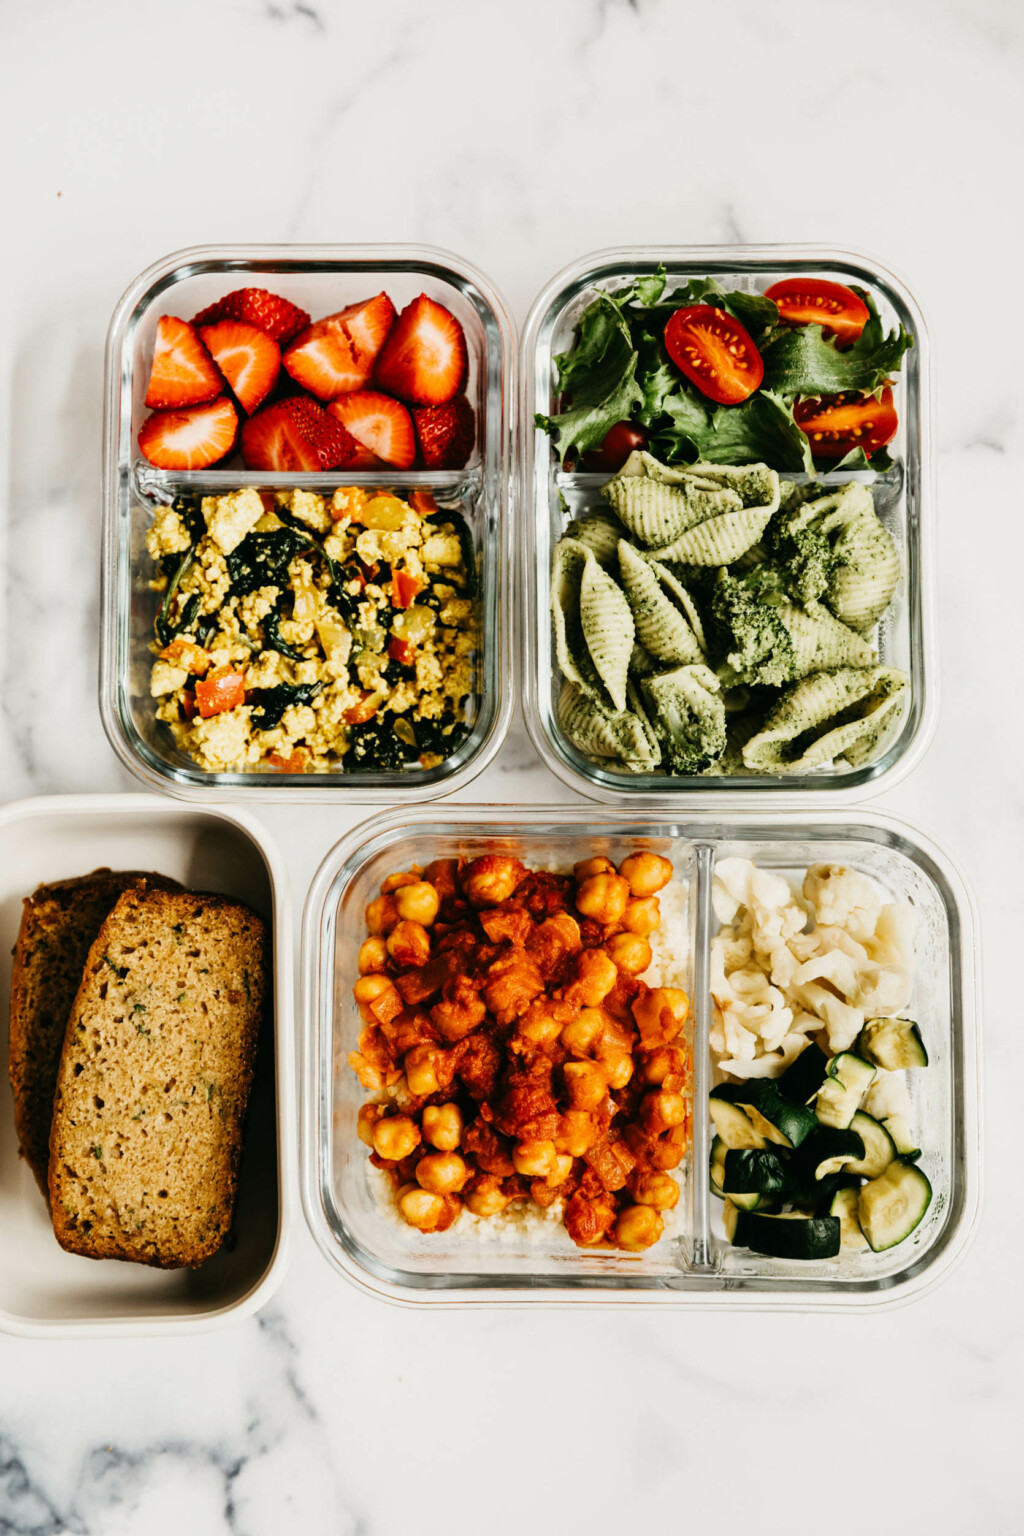 Vegan Meal Prep Lunch Ideas